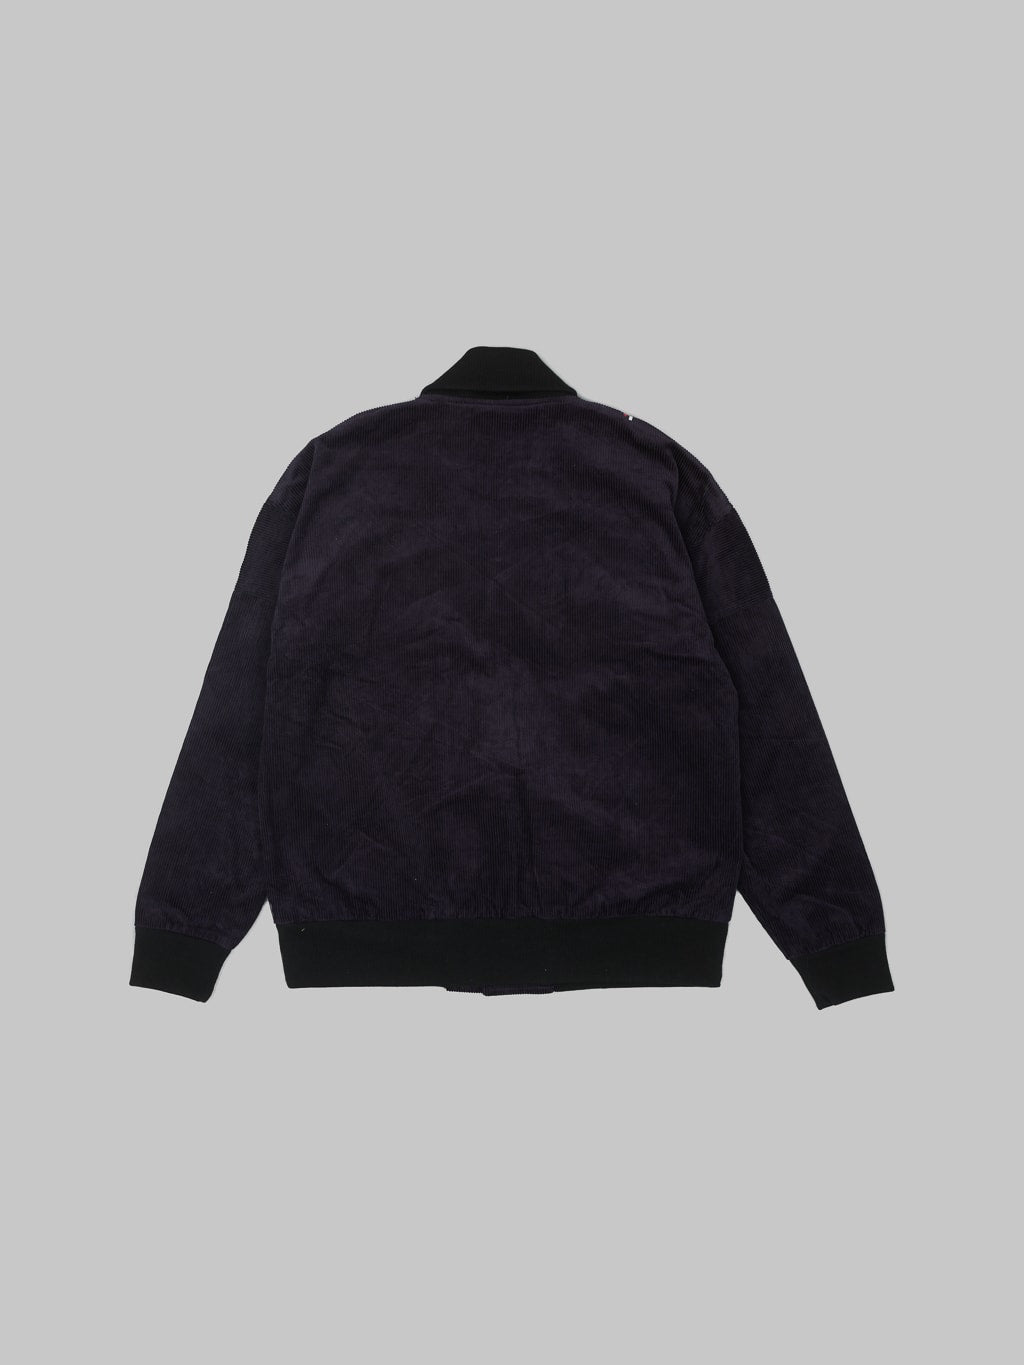 Tanuki Sazanami Corduroy natural indigo dyed Jacket back